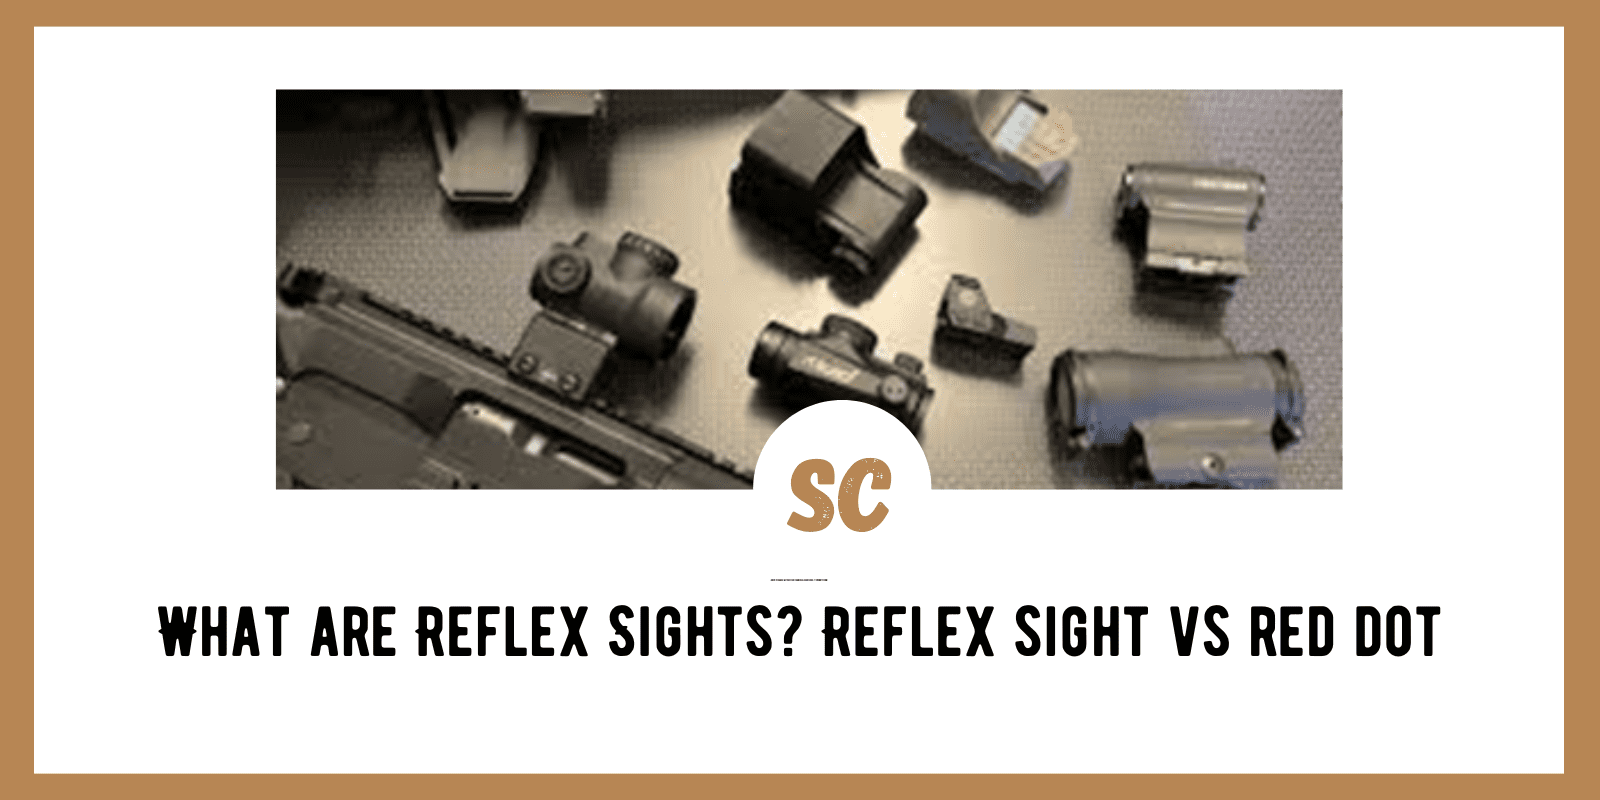 What are Reflex Sights? Reflex sight vs red dot